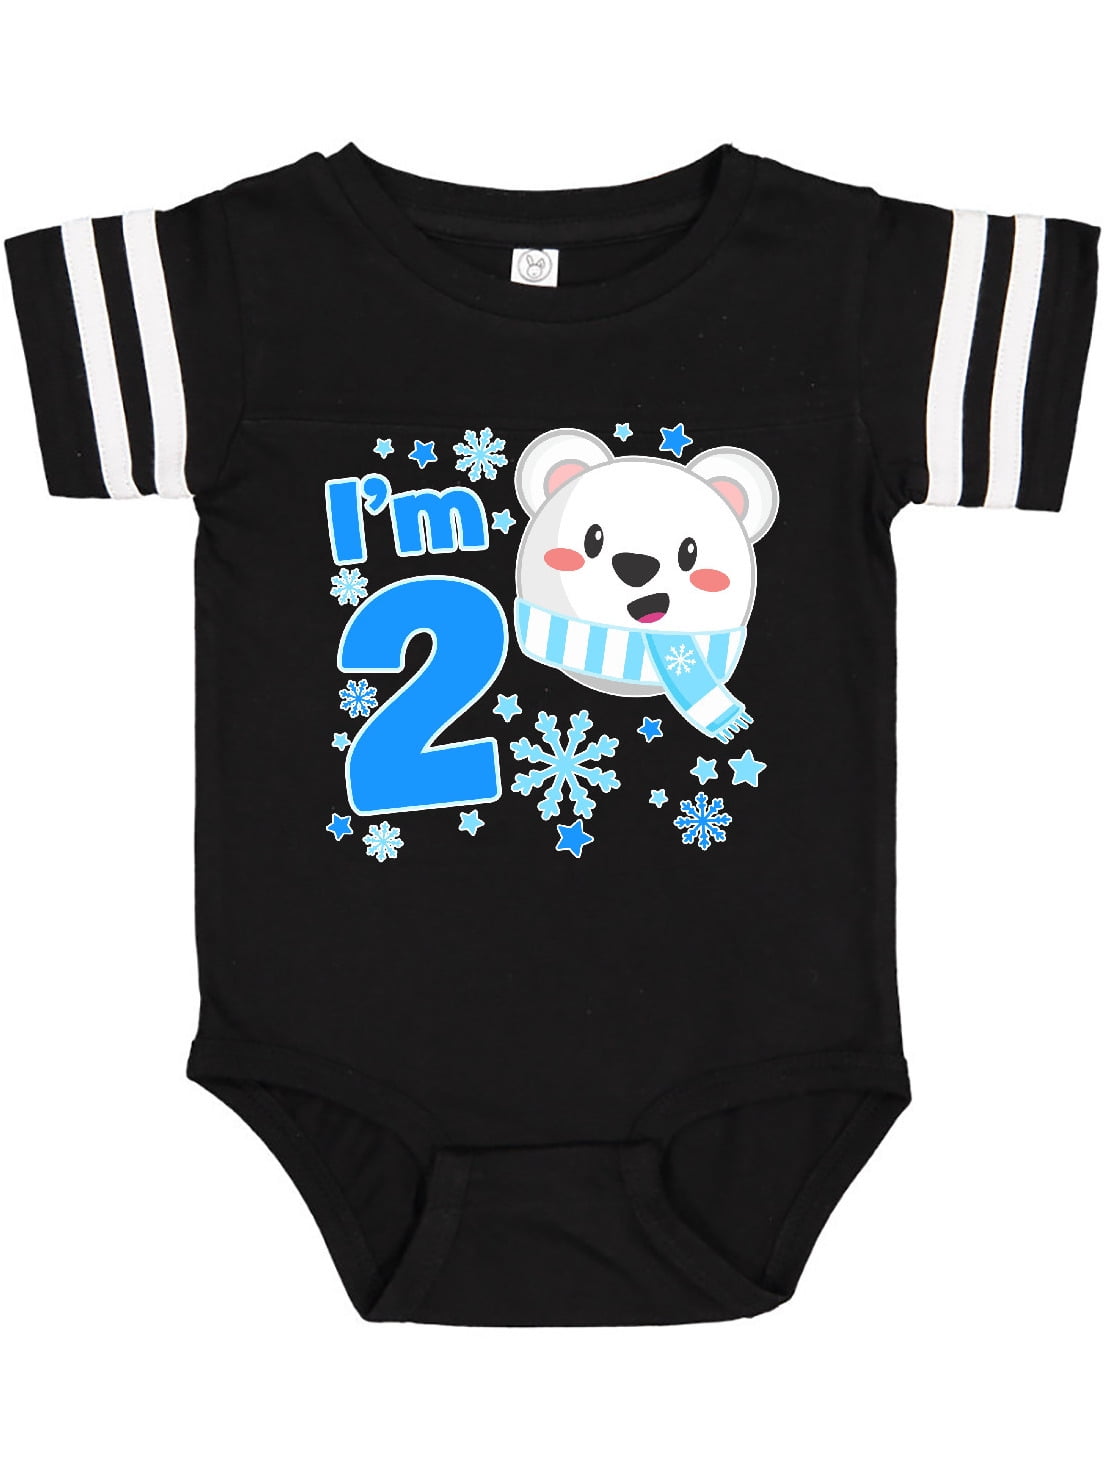 Black with white polar bear Baby bodysuit shirt 